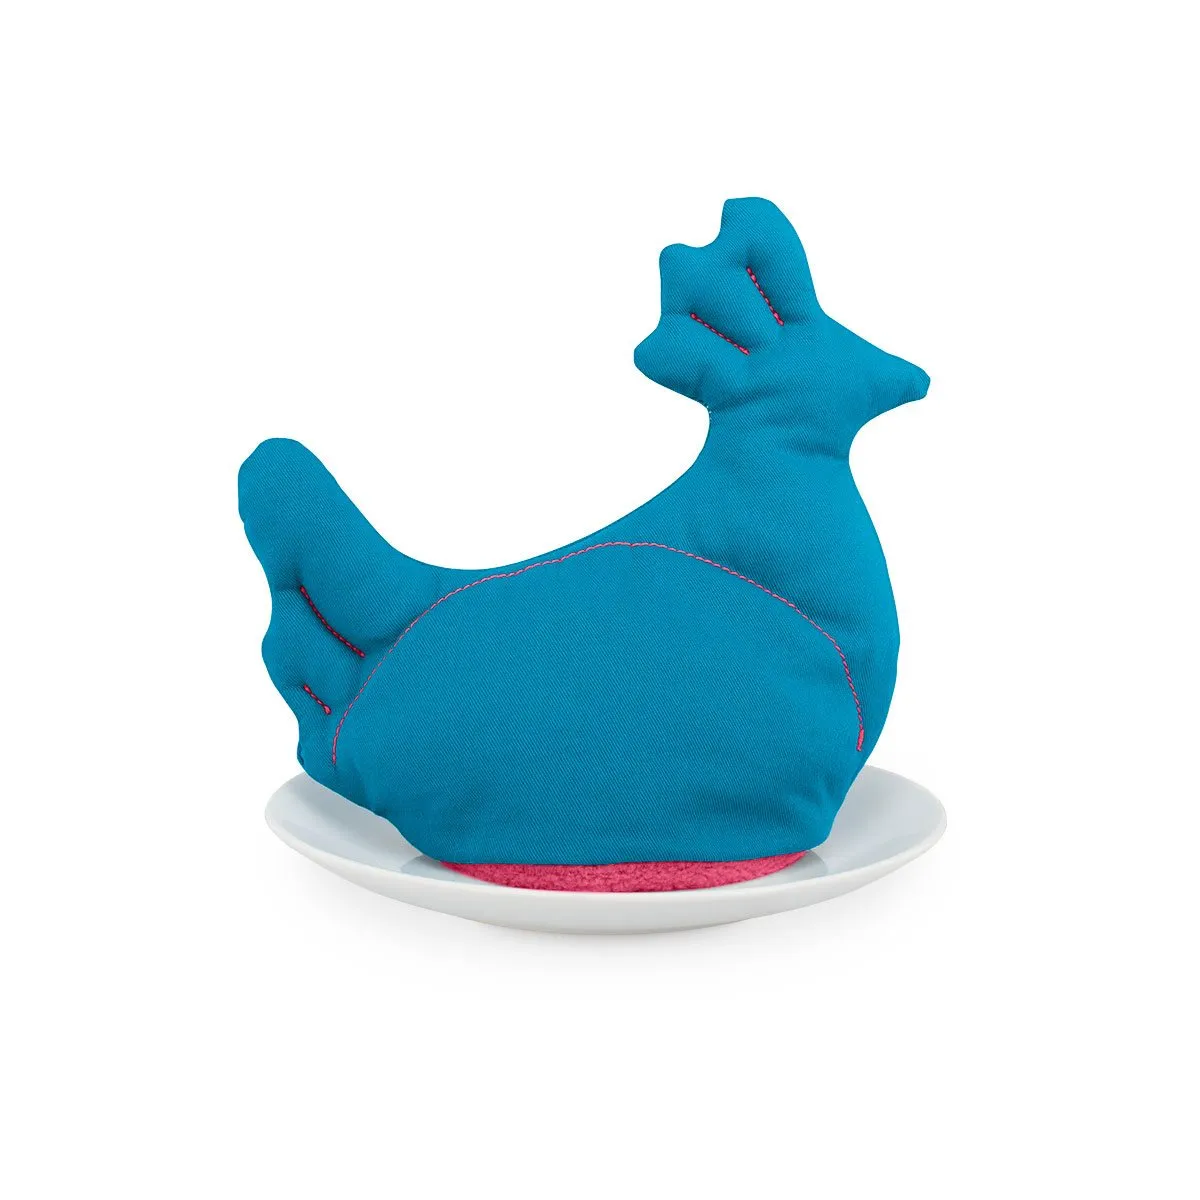 Chauffe-oeufs - La poule Roberta - turquoise